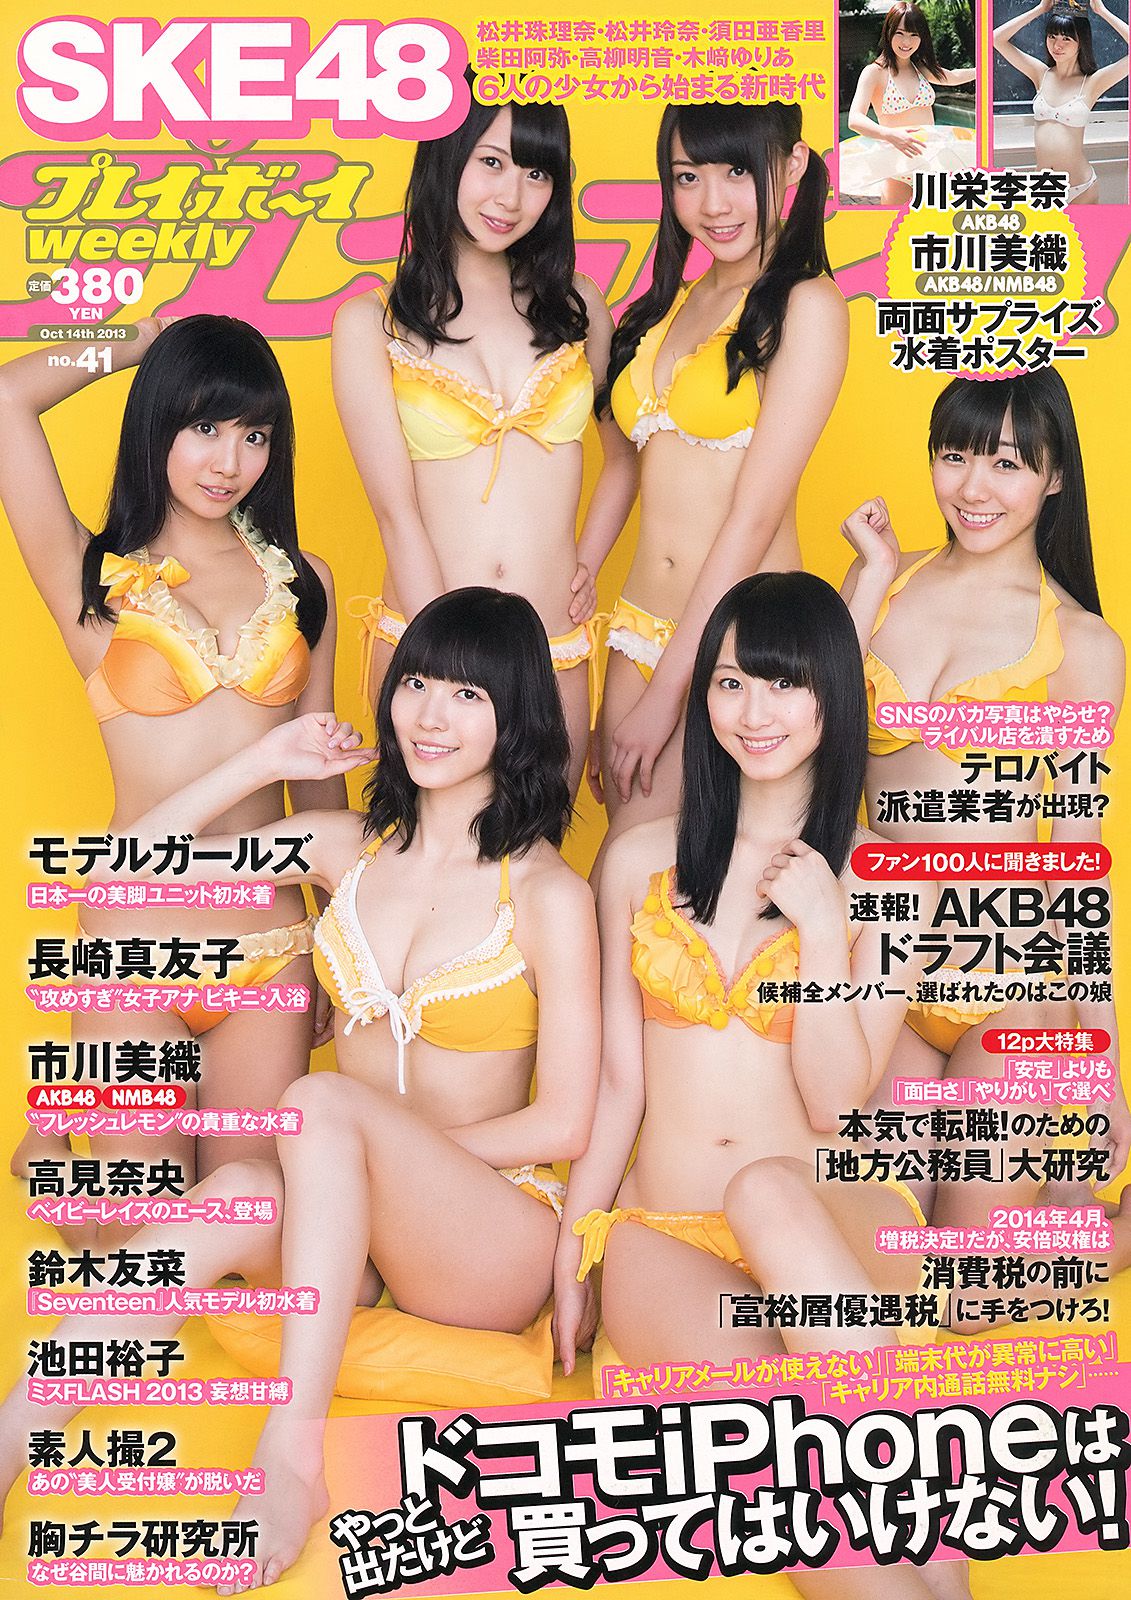 [Weekly Playboy] 2013年No.41 写真杂志